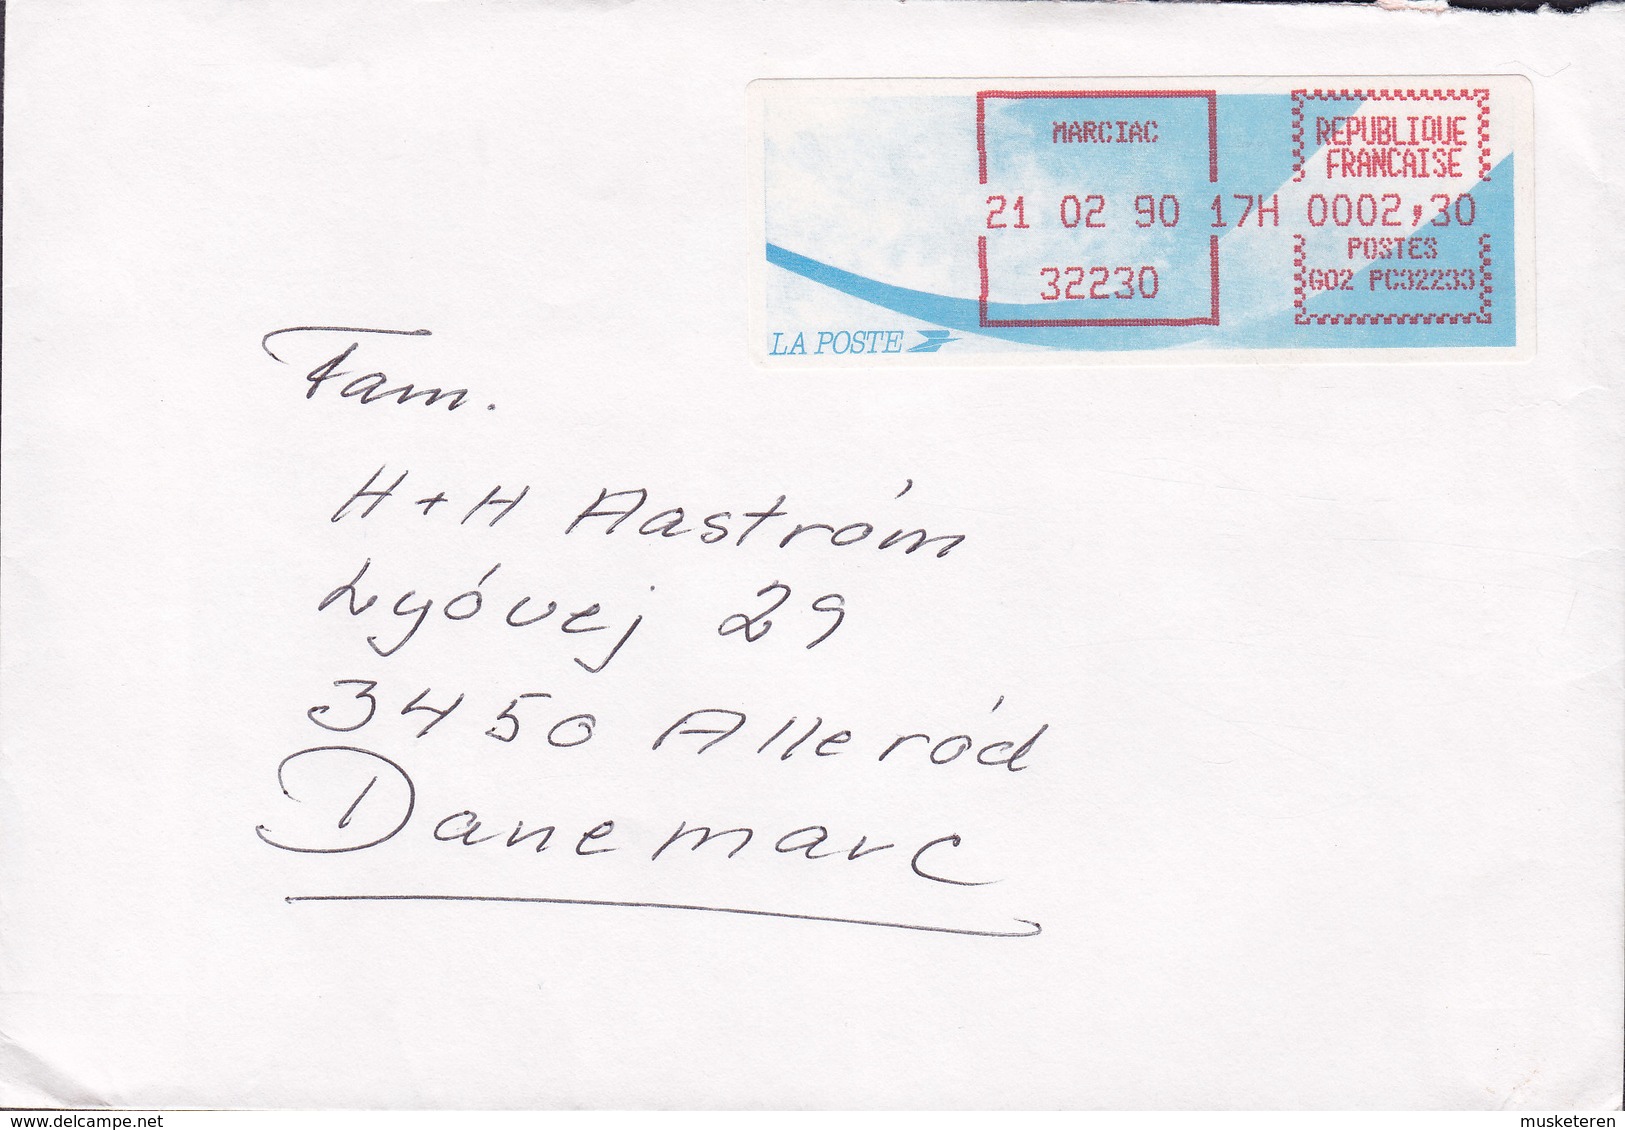 France ATM FRama Label MARCIAC 1990 Cover Lettre ALLERØD Denmark - 1990 « Oiseaux De Jubert »